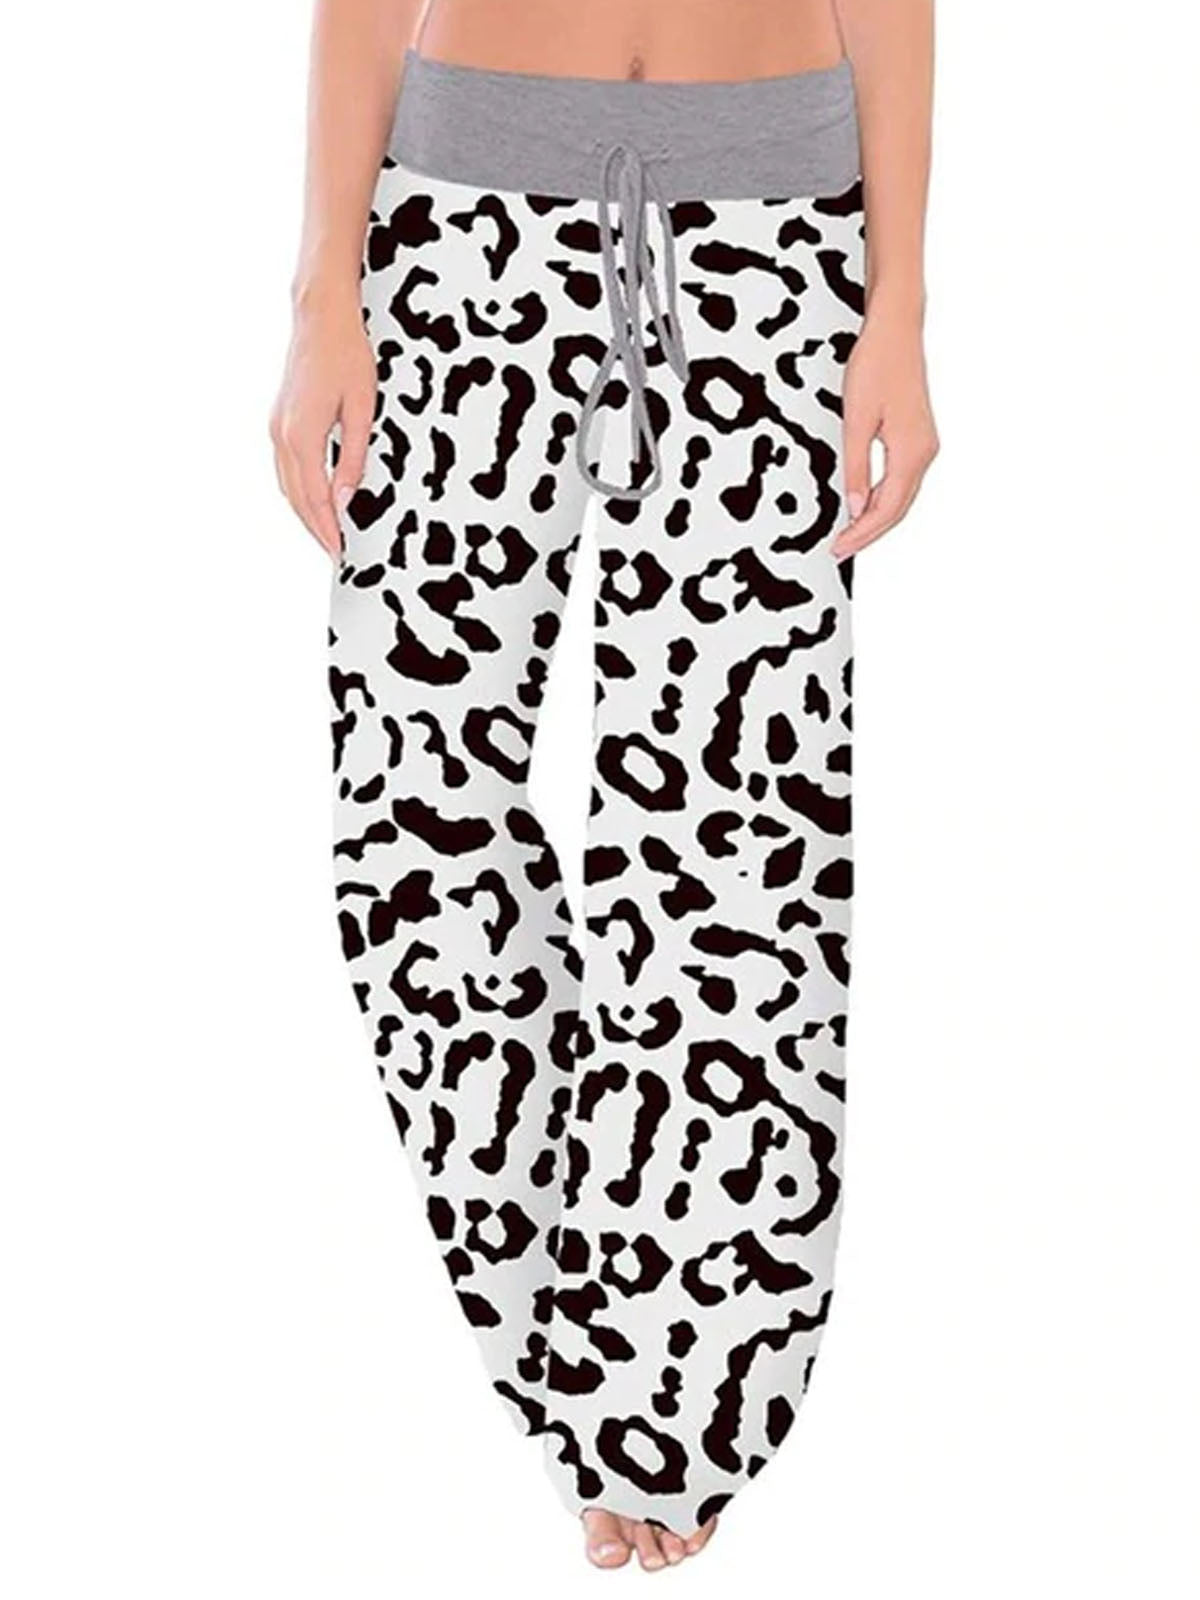 Women's Loungewear┃Cute Cheetah Print Fit Yoga Pants - Mia Belle Girls